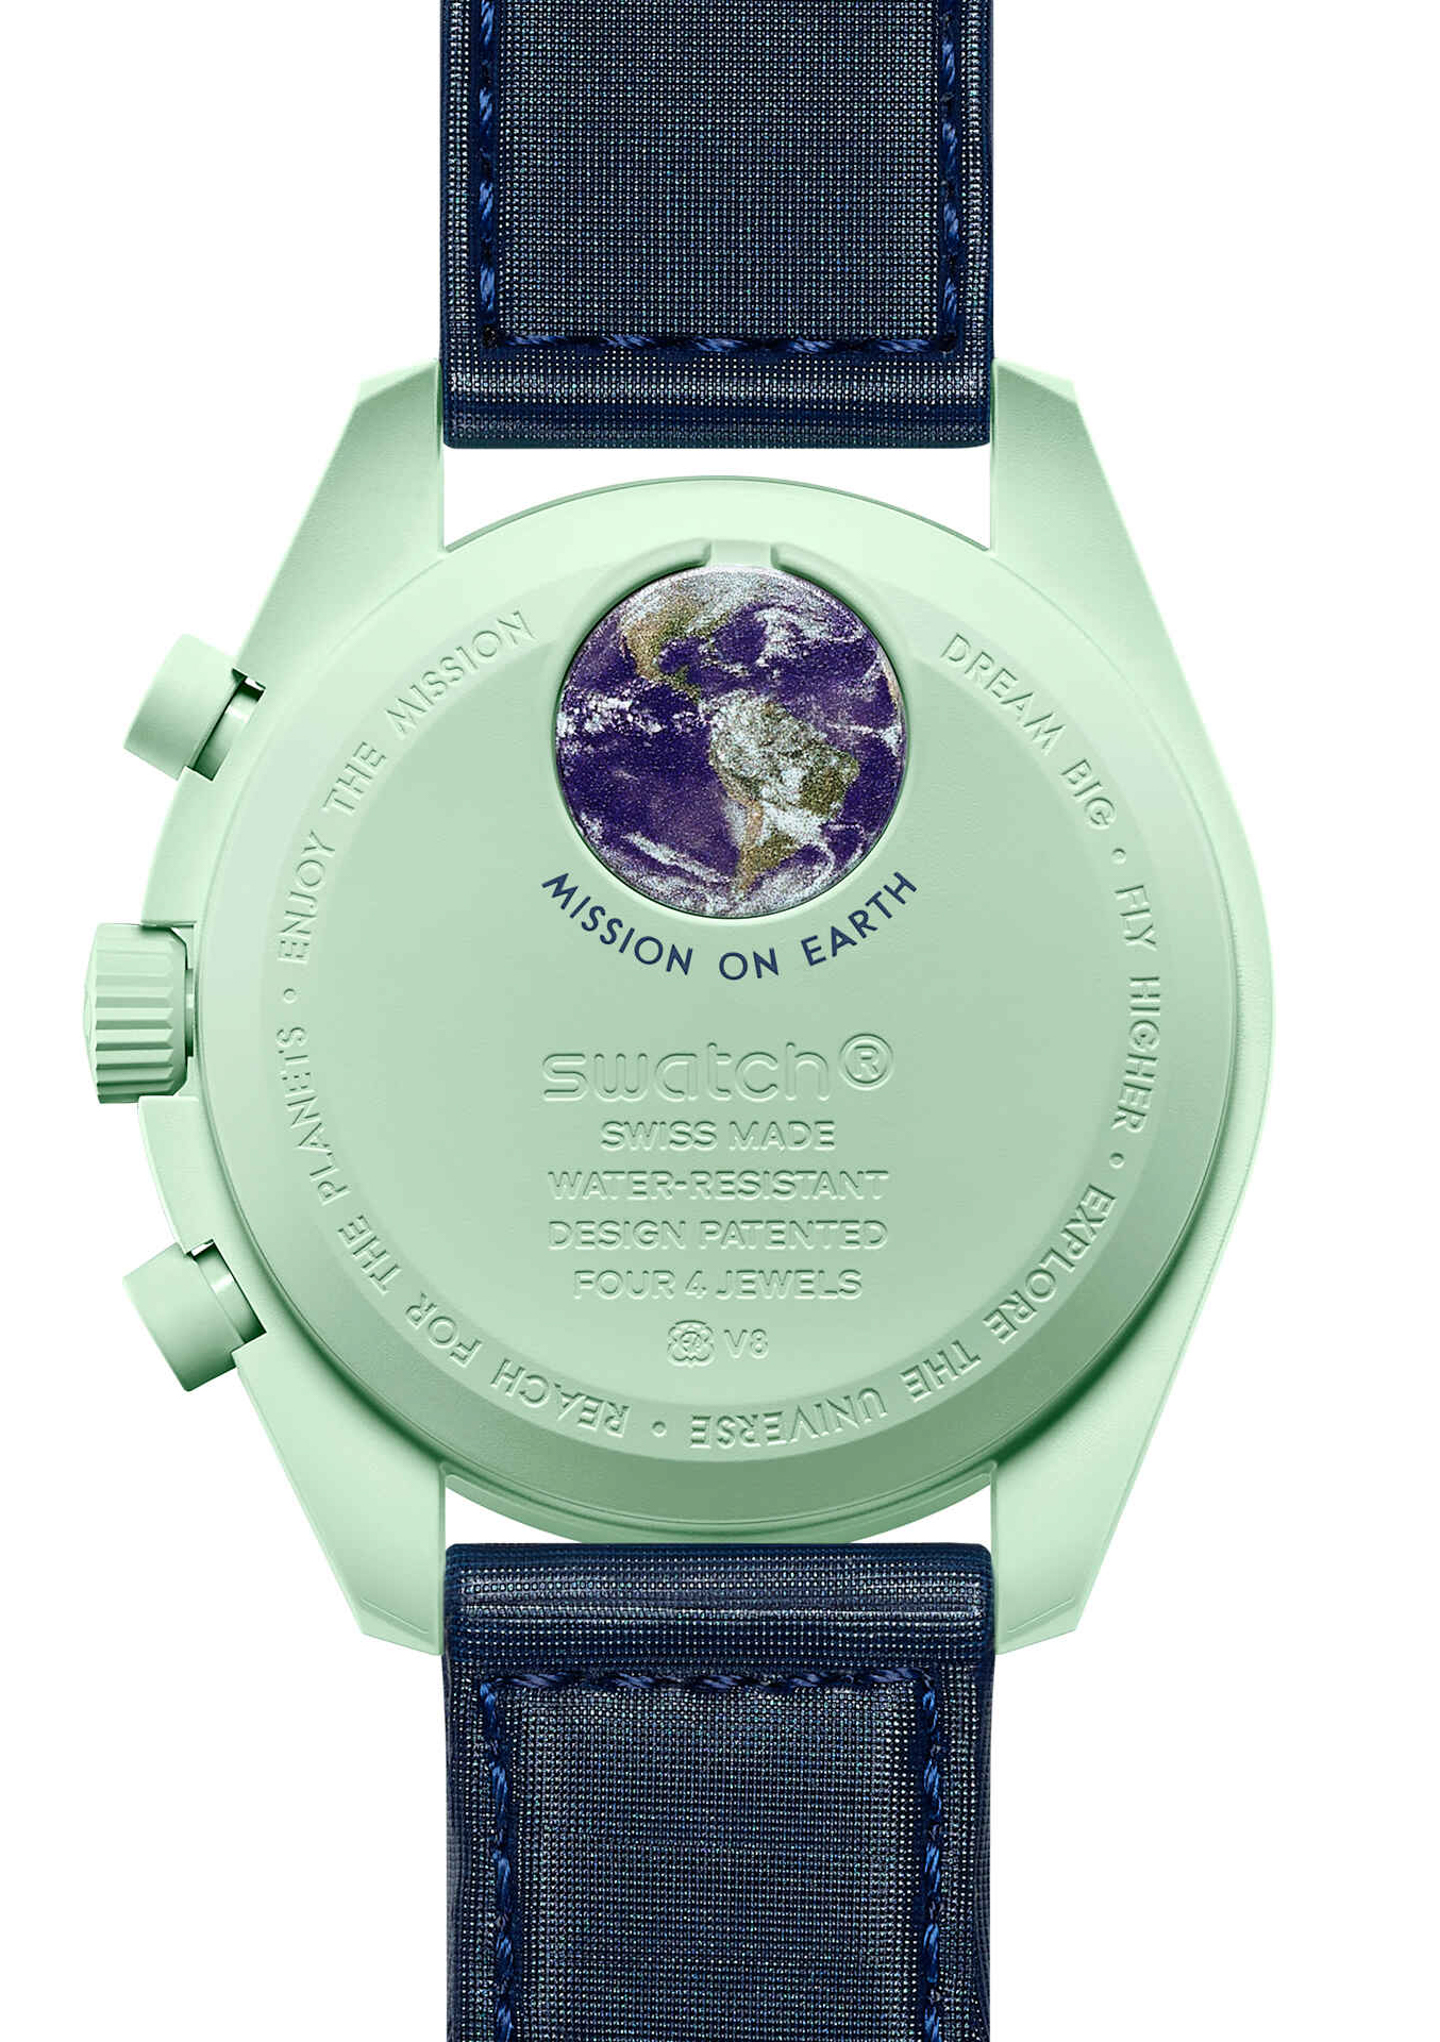 Omega X Swatch Bioceramic MoonSwatch Speedmaster Watches 